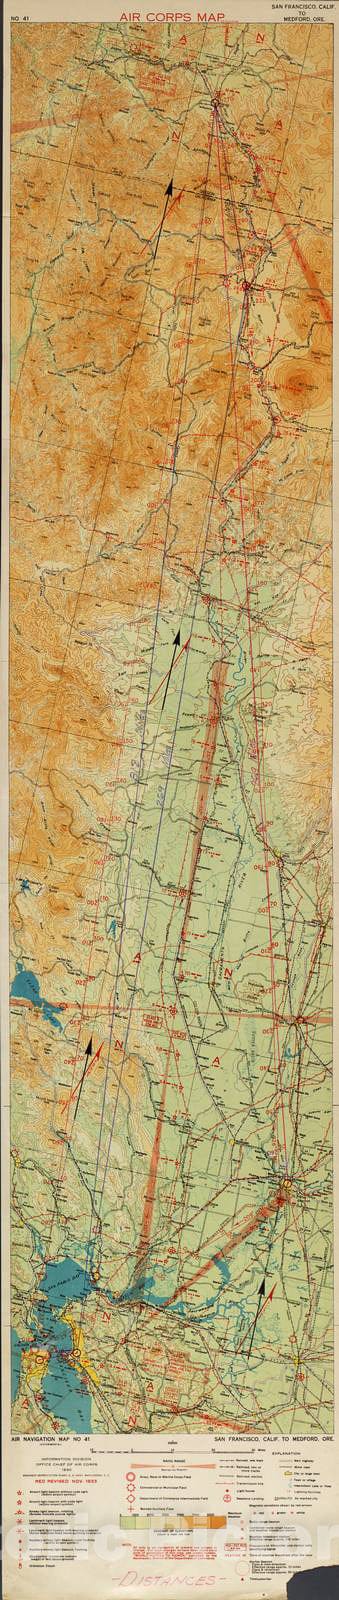 Historic 1924 Map - Aeronautical Strip maps of The United States. - No. 41, 1930 - rev. Nov. 1933 - Air Corps map